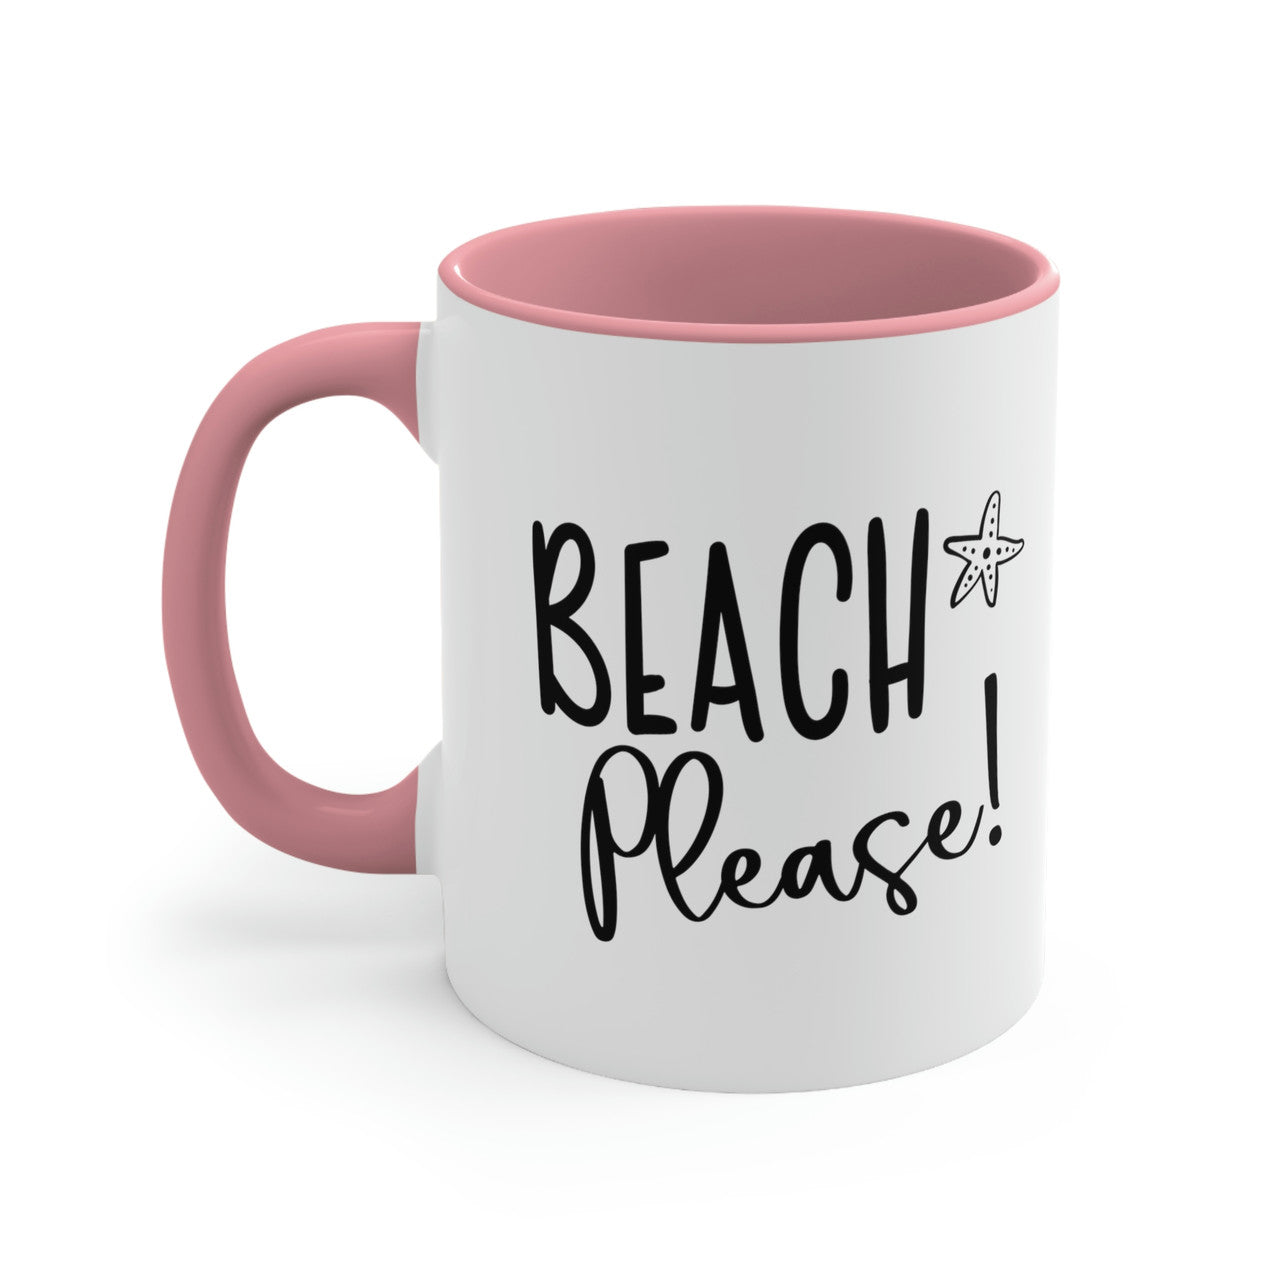 BEACH Please! Ceramic Beach Coffee Mug, 5 Colors Mugs New England Trading Co Pink  